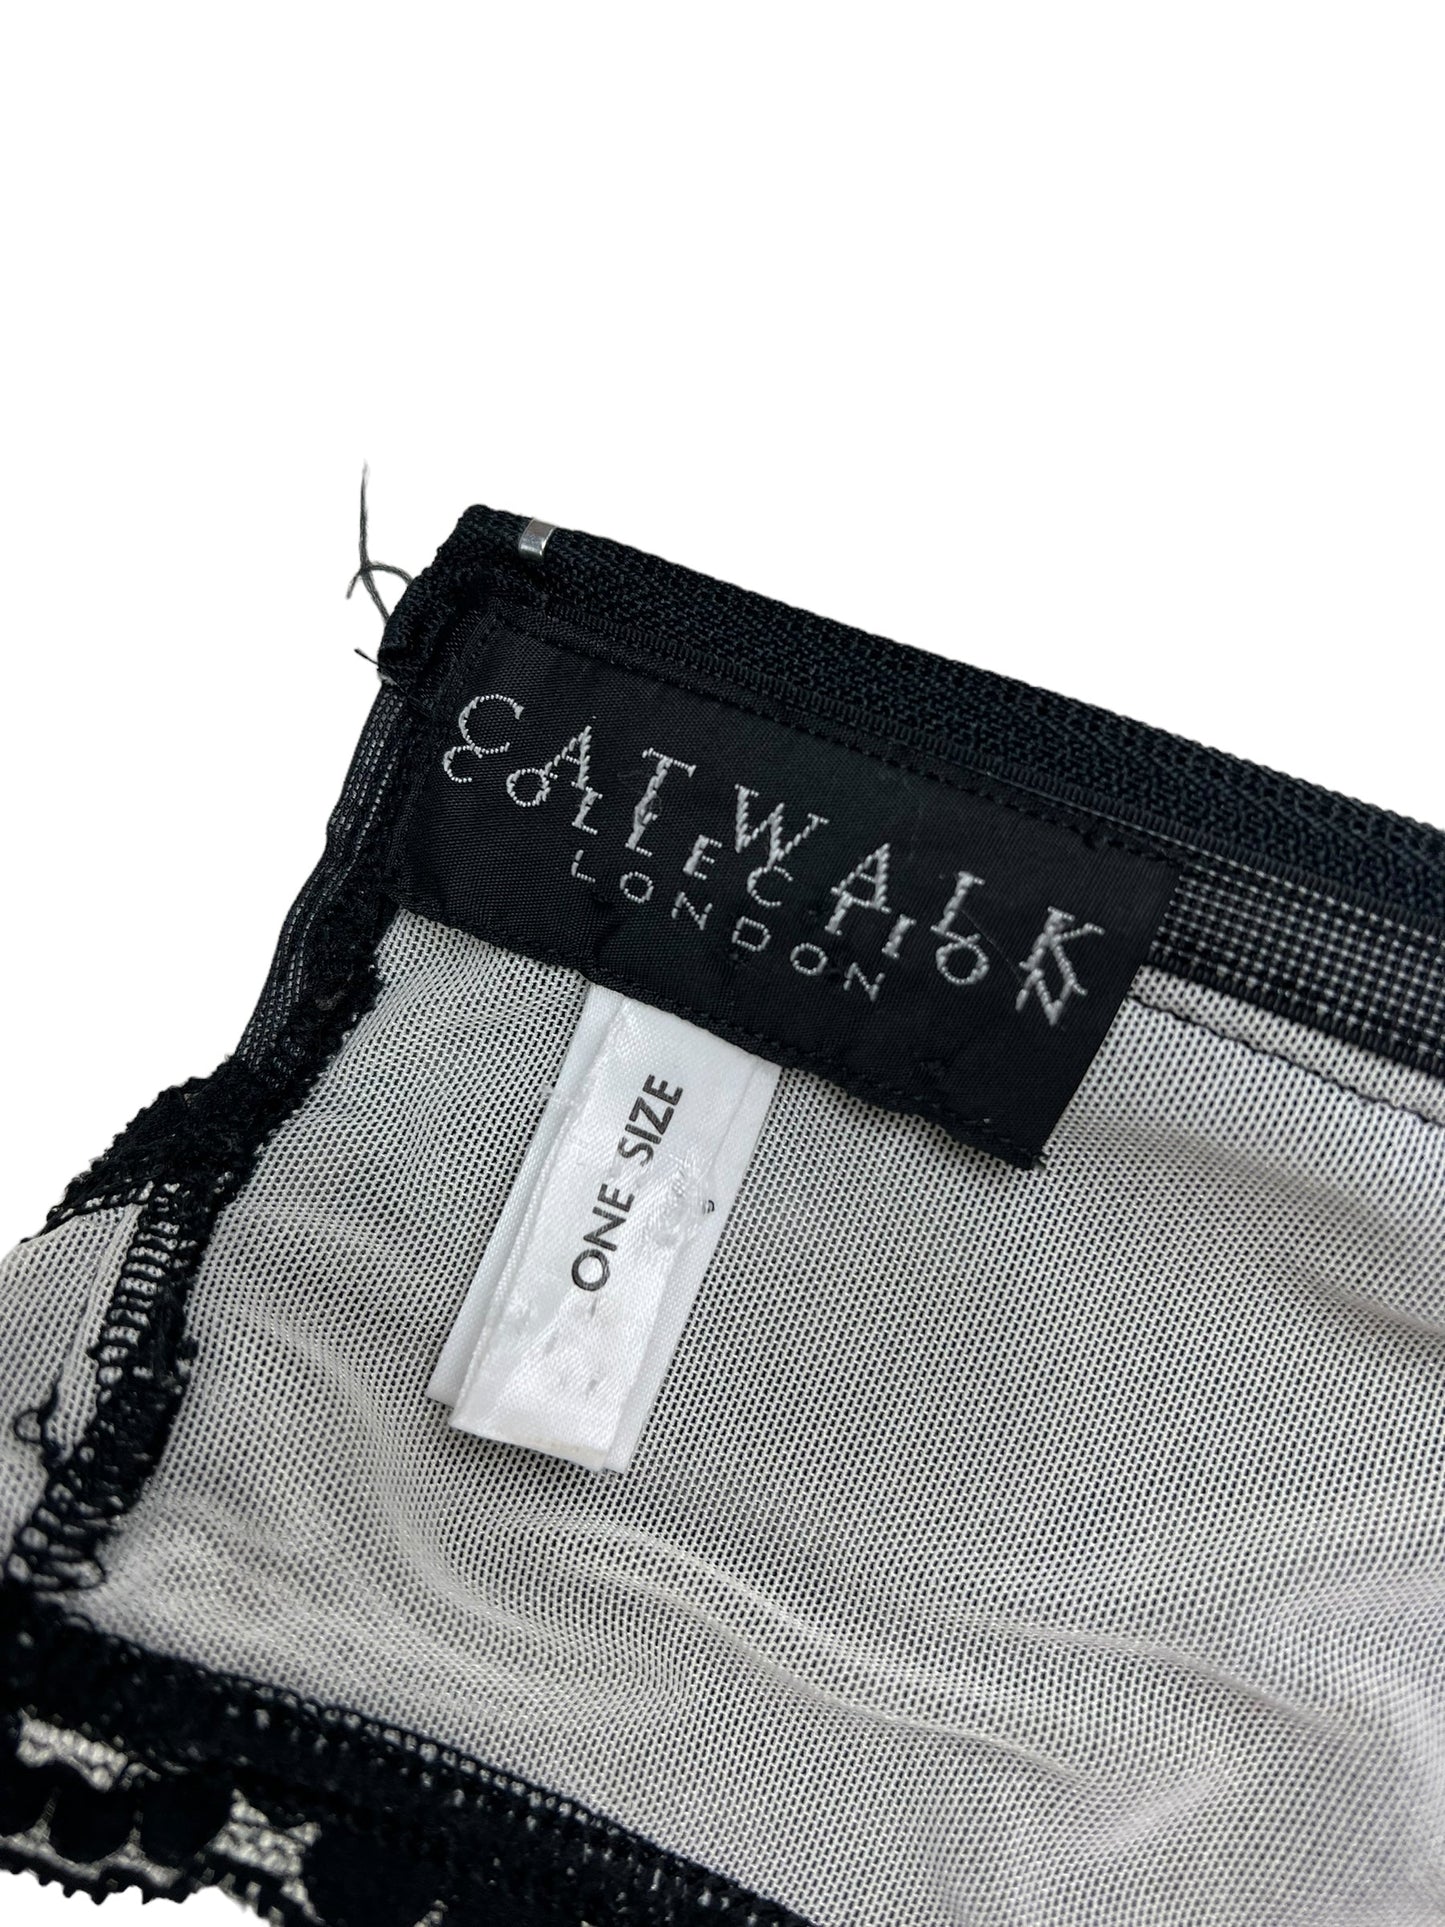 1990s Catwalk Collection Corset